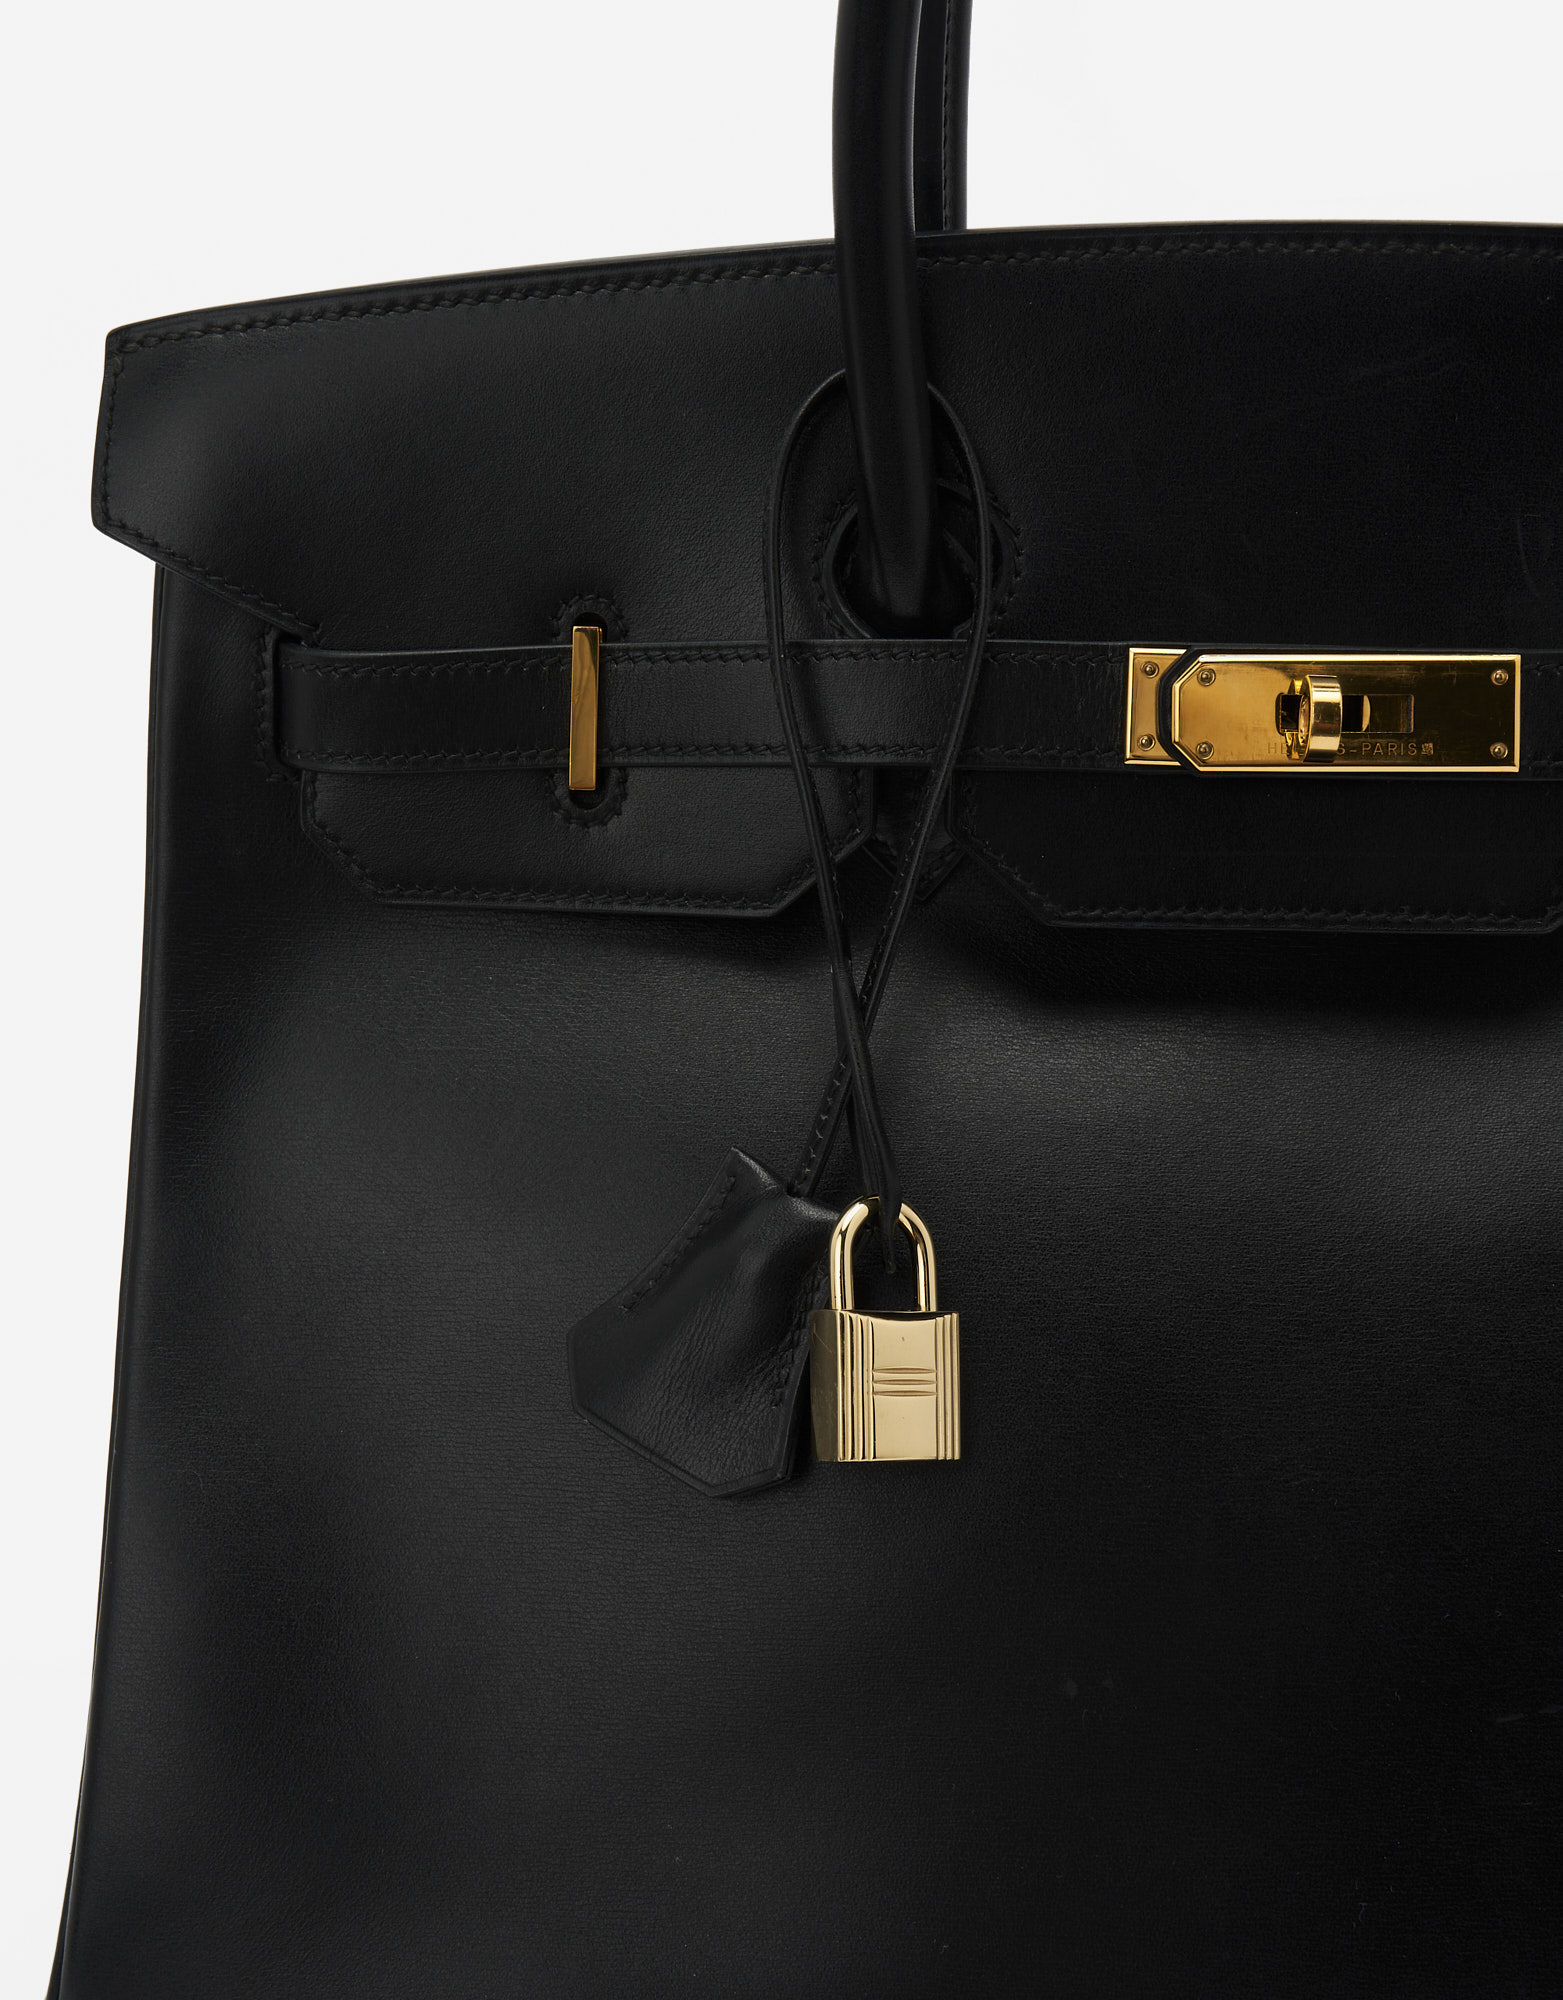 Hermes Birkin 30 Black Box Leather Gold Hardware